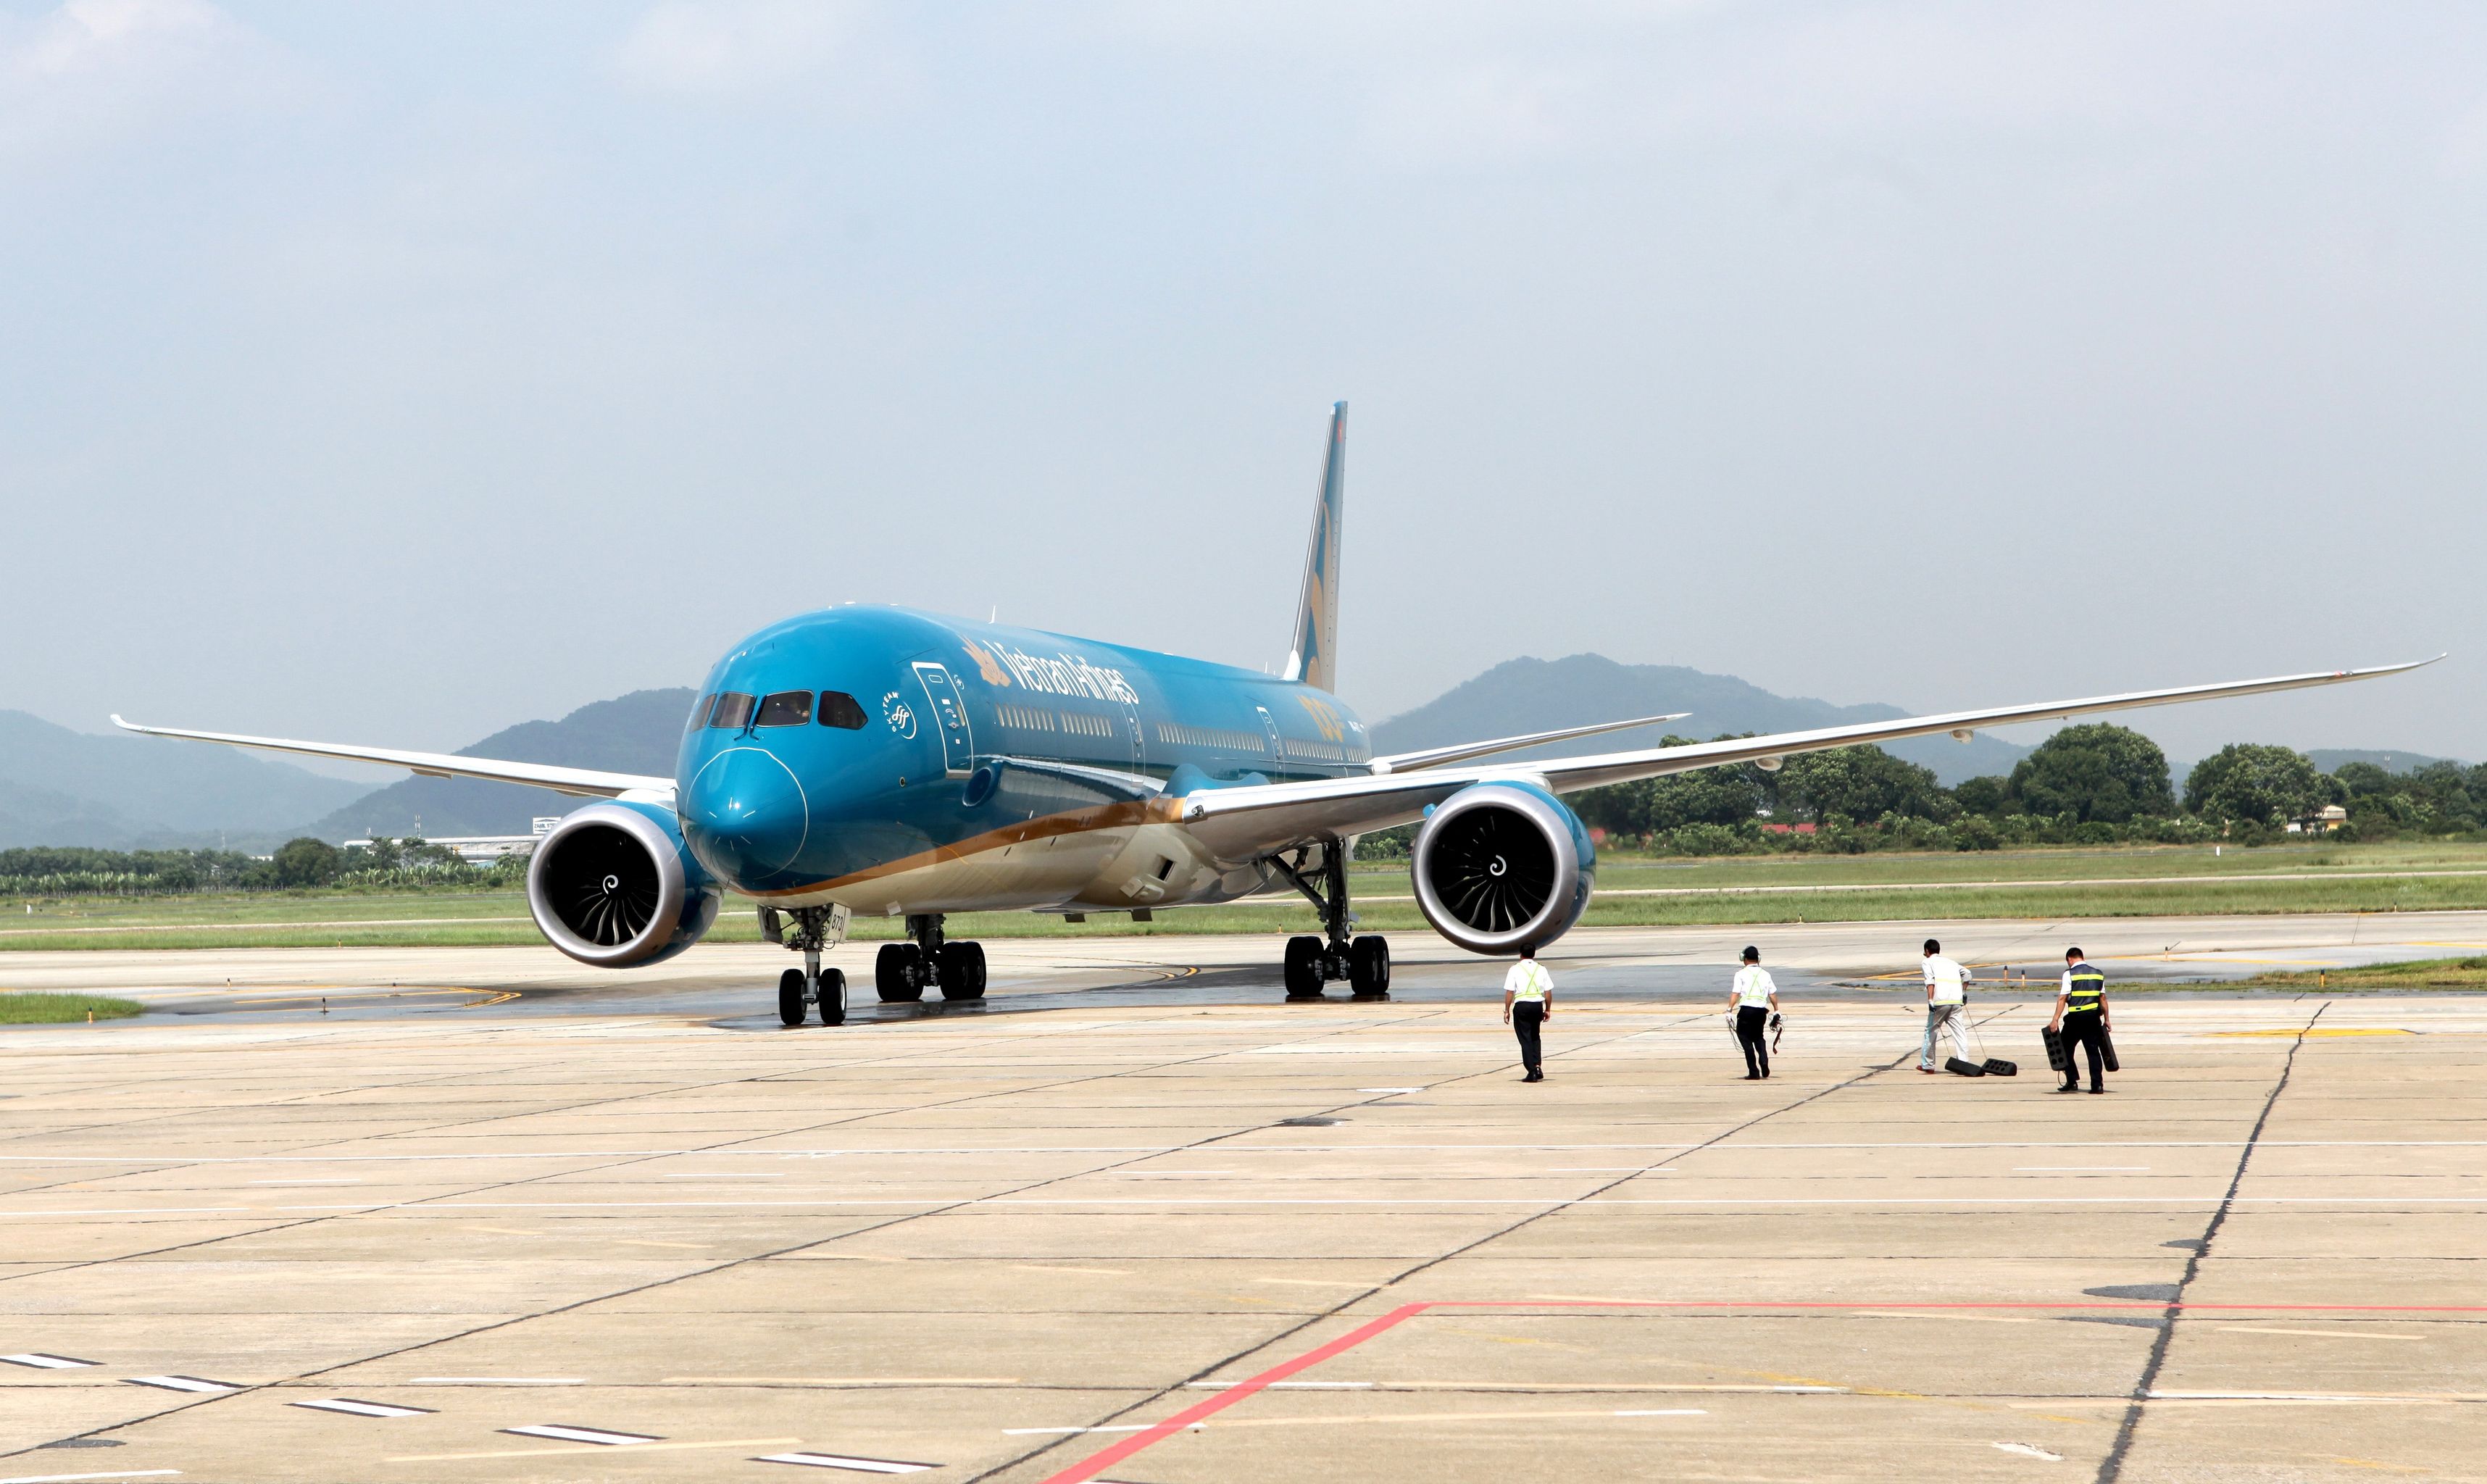 Vietnam Airlines to operate 2 direct flights between Vietnam and US each week: CEO